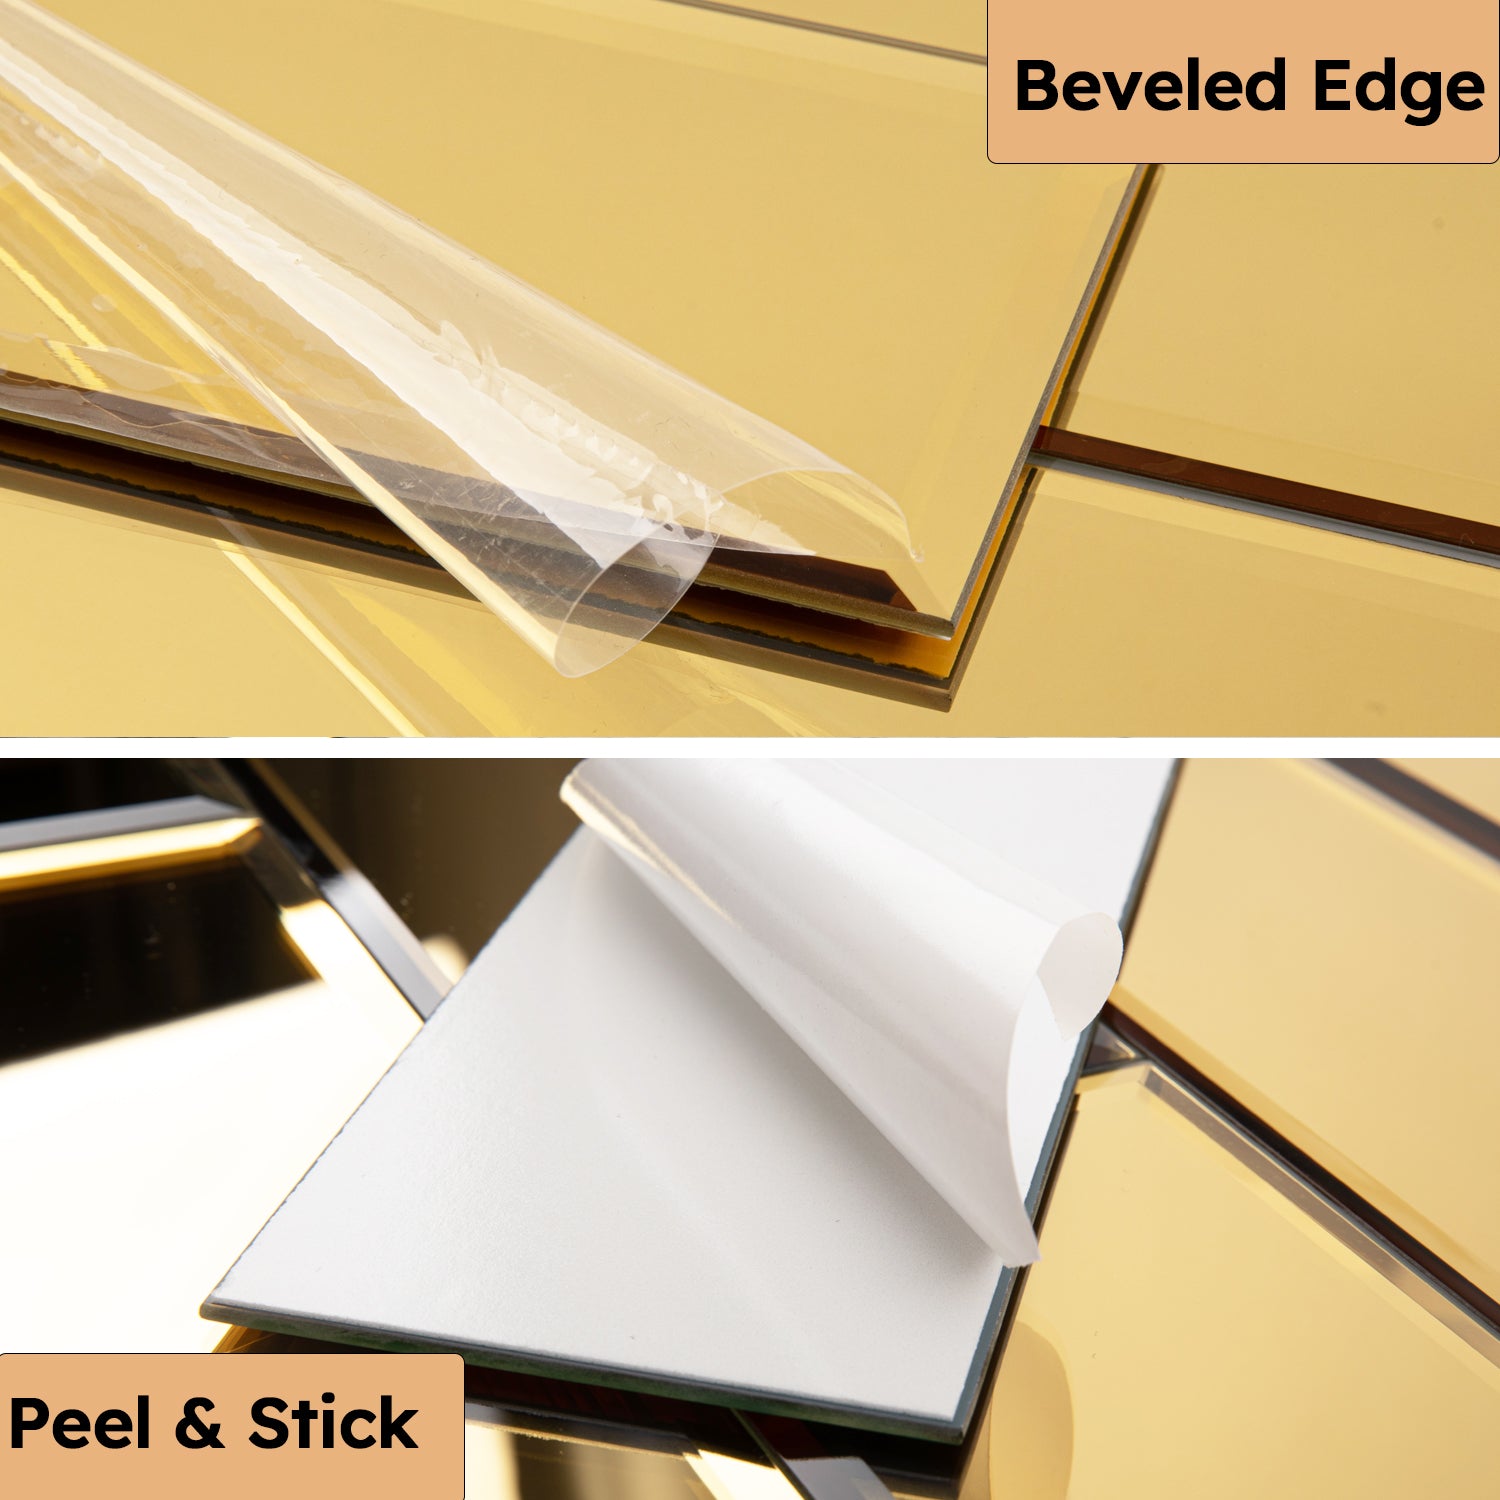 Beveled Gold Mirror Backsplash Subway Tiles 3x10 Inch Peel and Stick Pack of 24 Pcs